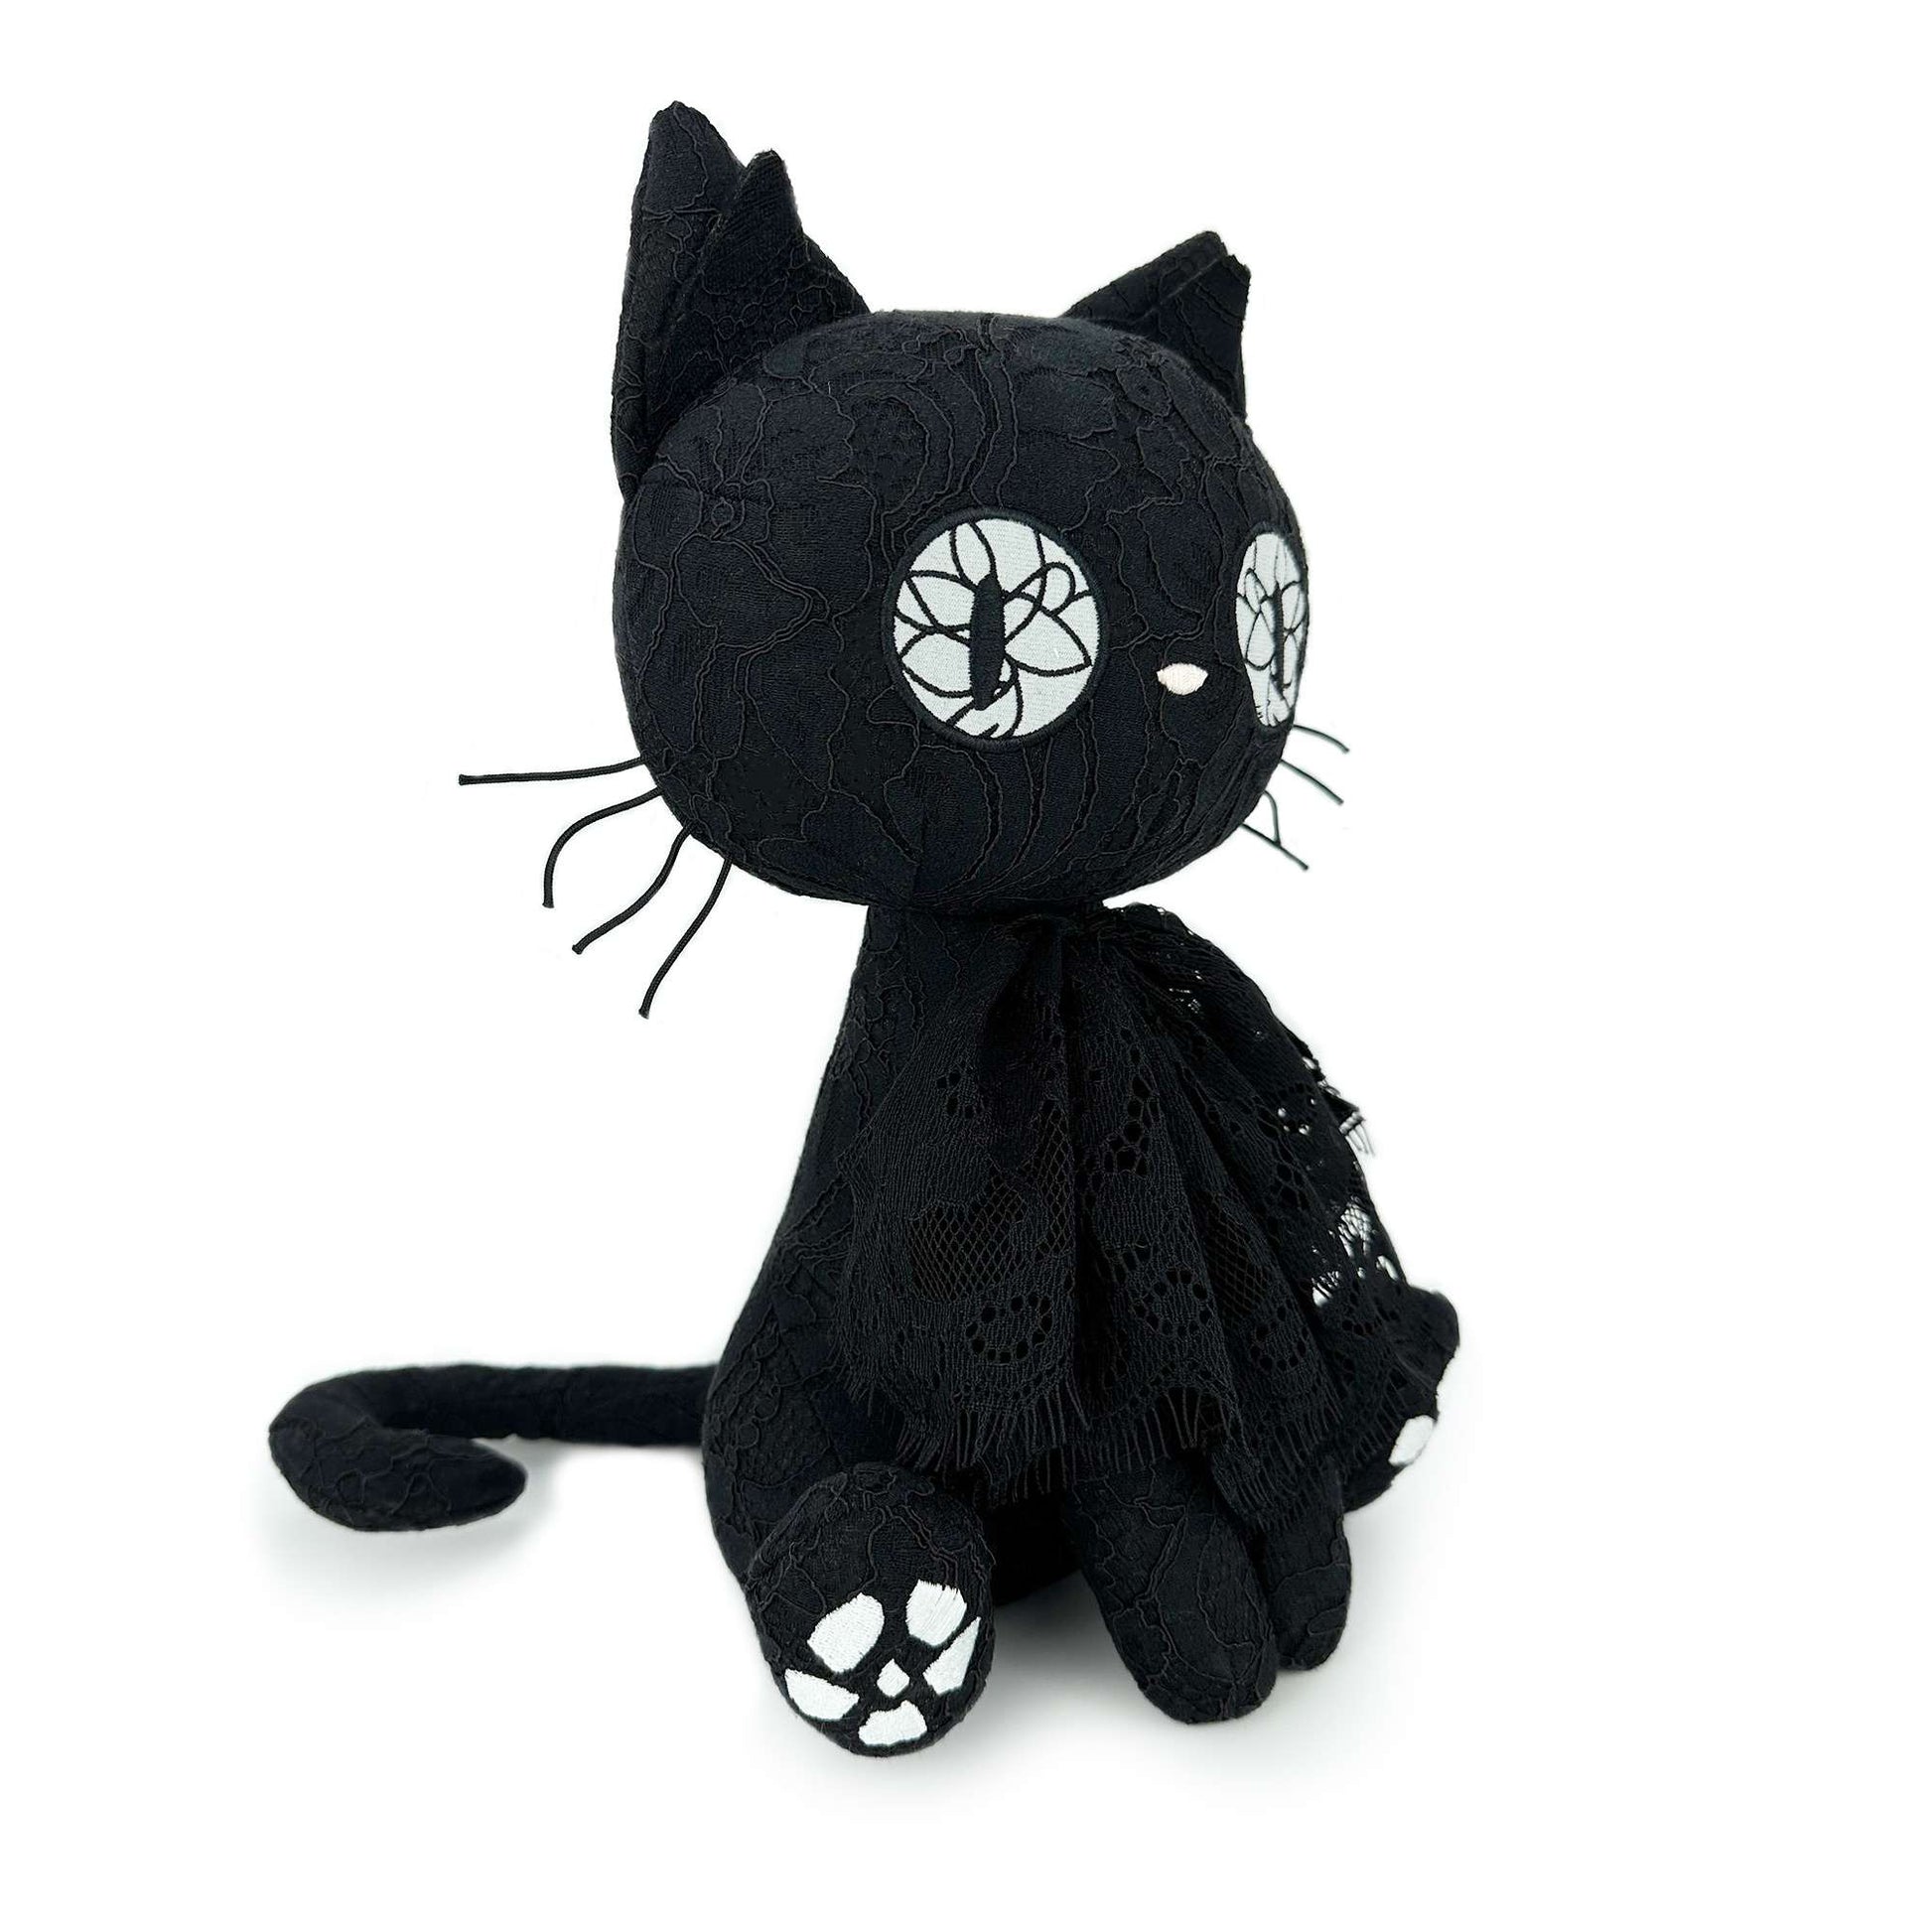 Bombay Black Cat stuffed animal side view